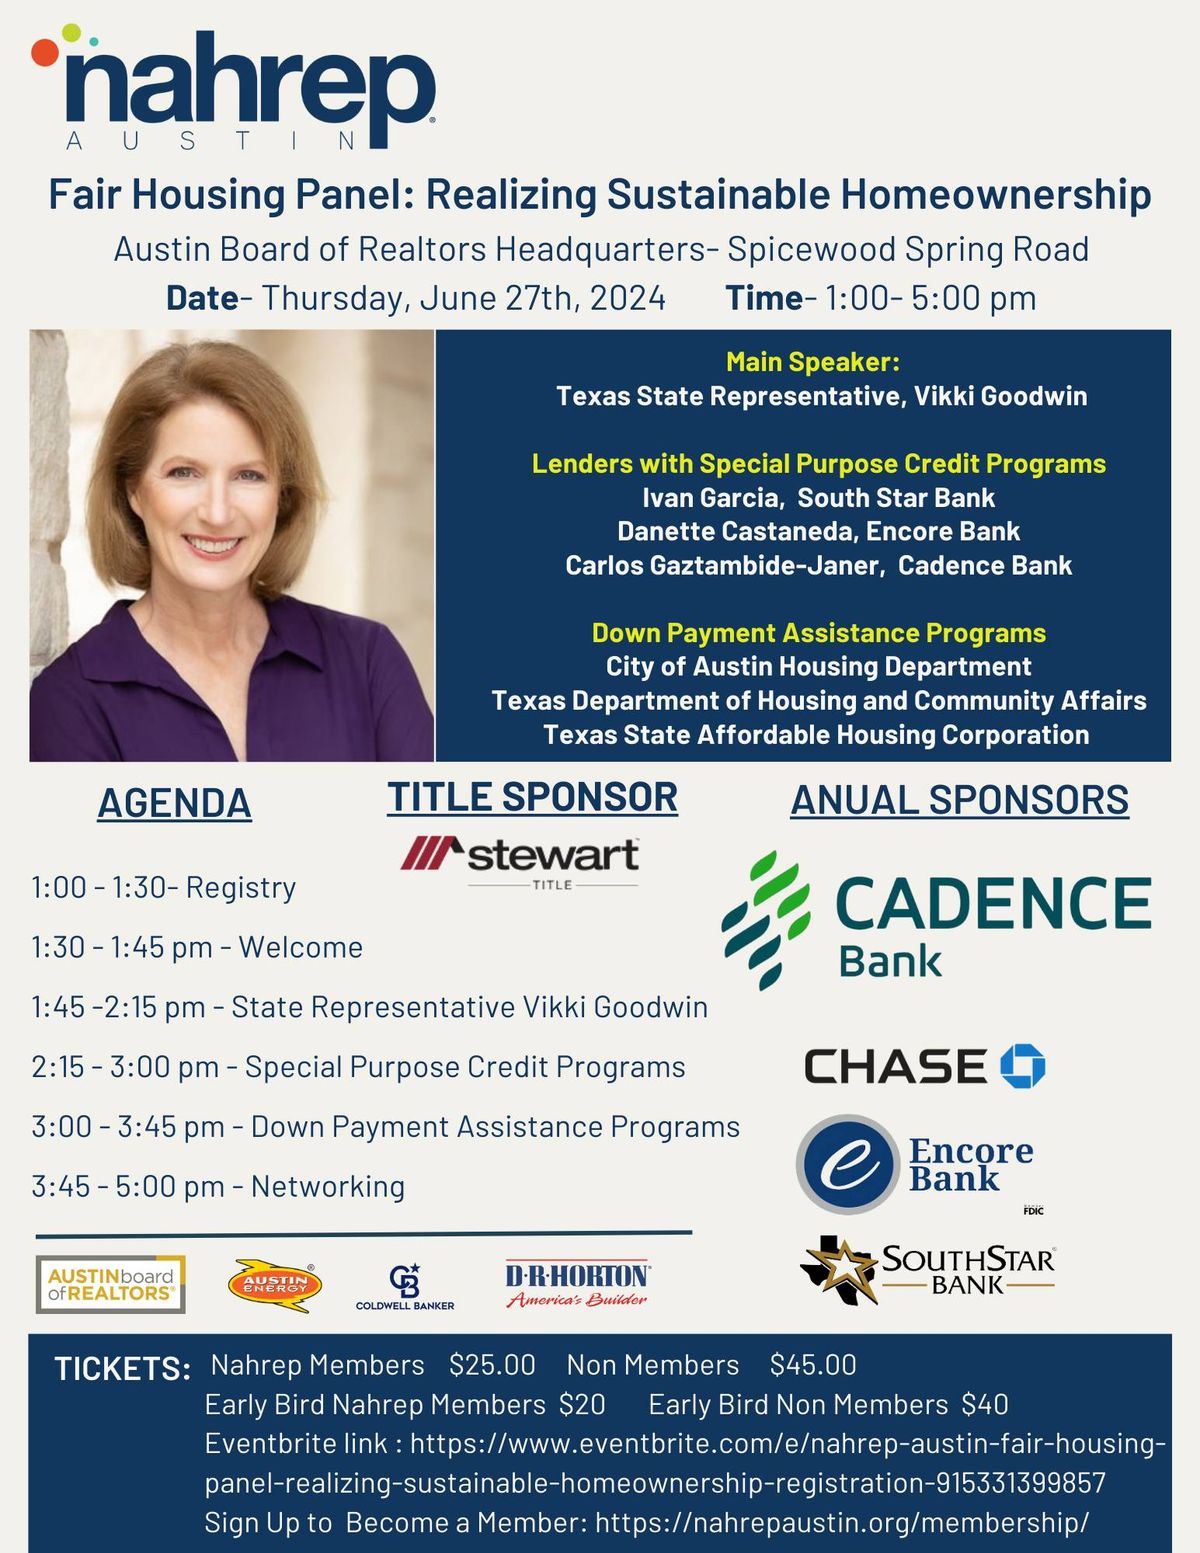 Nahrep Austin- Fair Housing Panel: Realizing Sustainable Homeownership